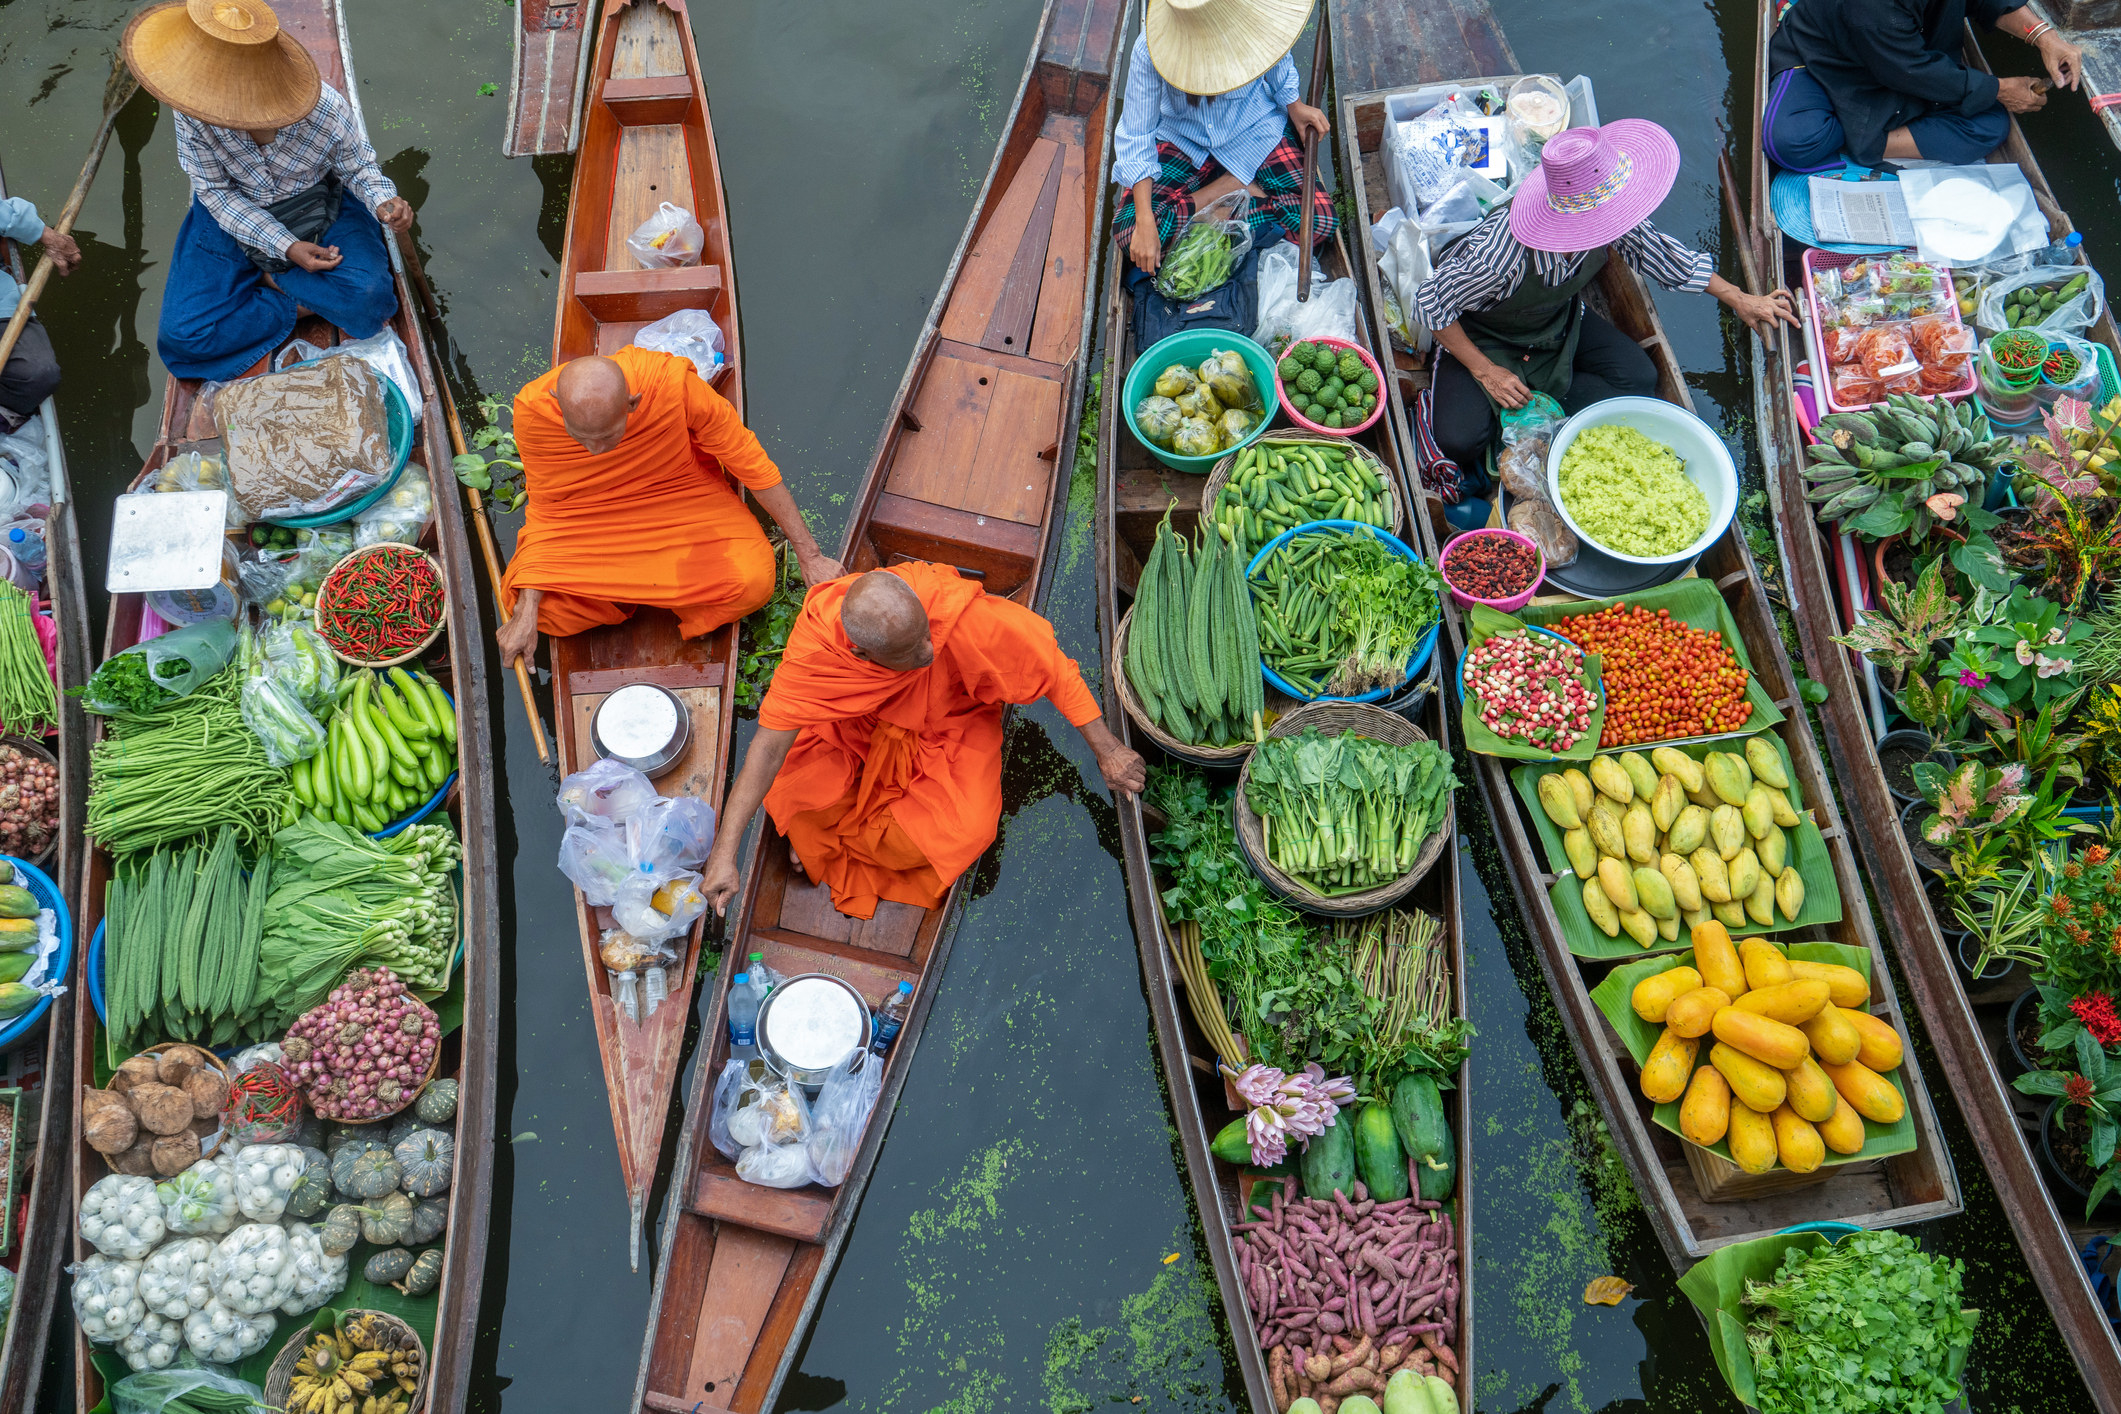 Floating market in Thailand.